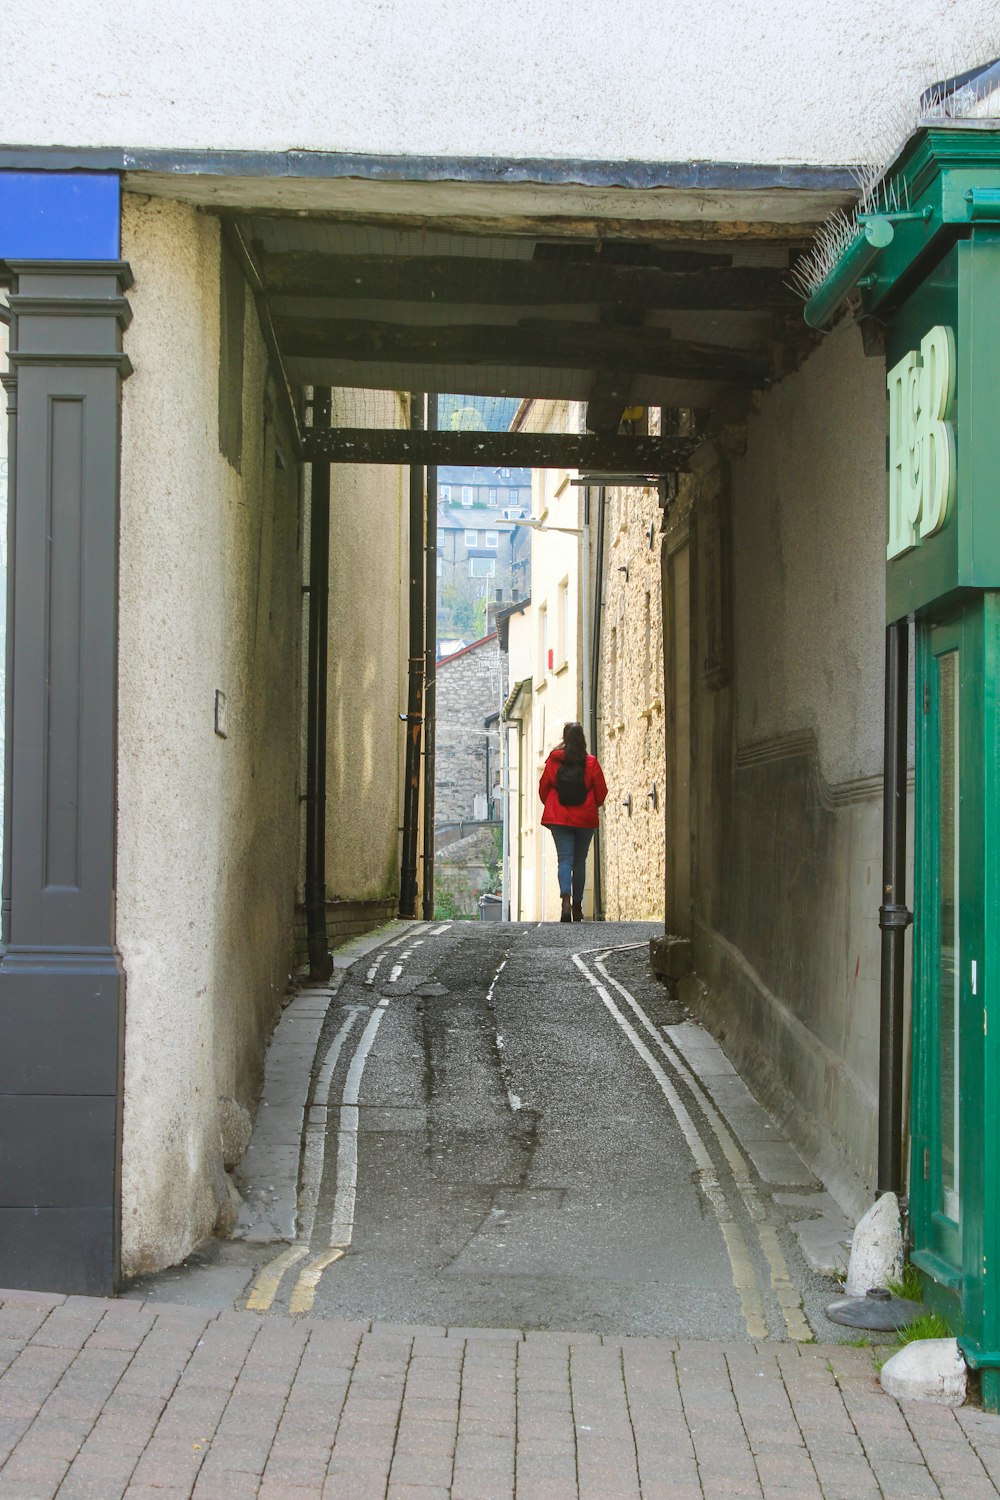 a person walking through an alley